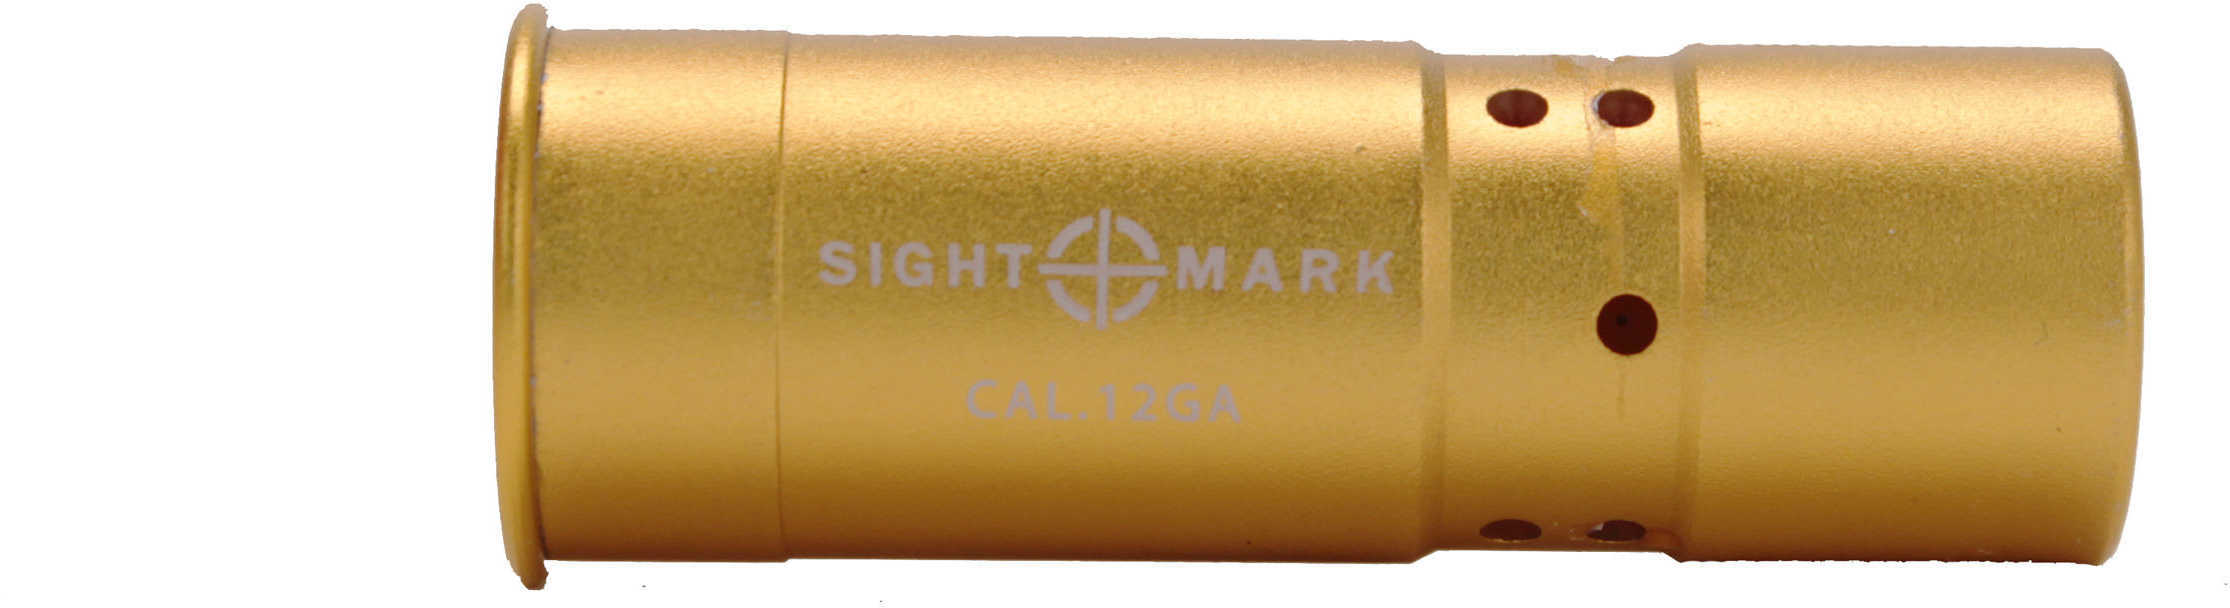 Sightmark 12 Gauge Premium Laser Boresight